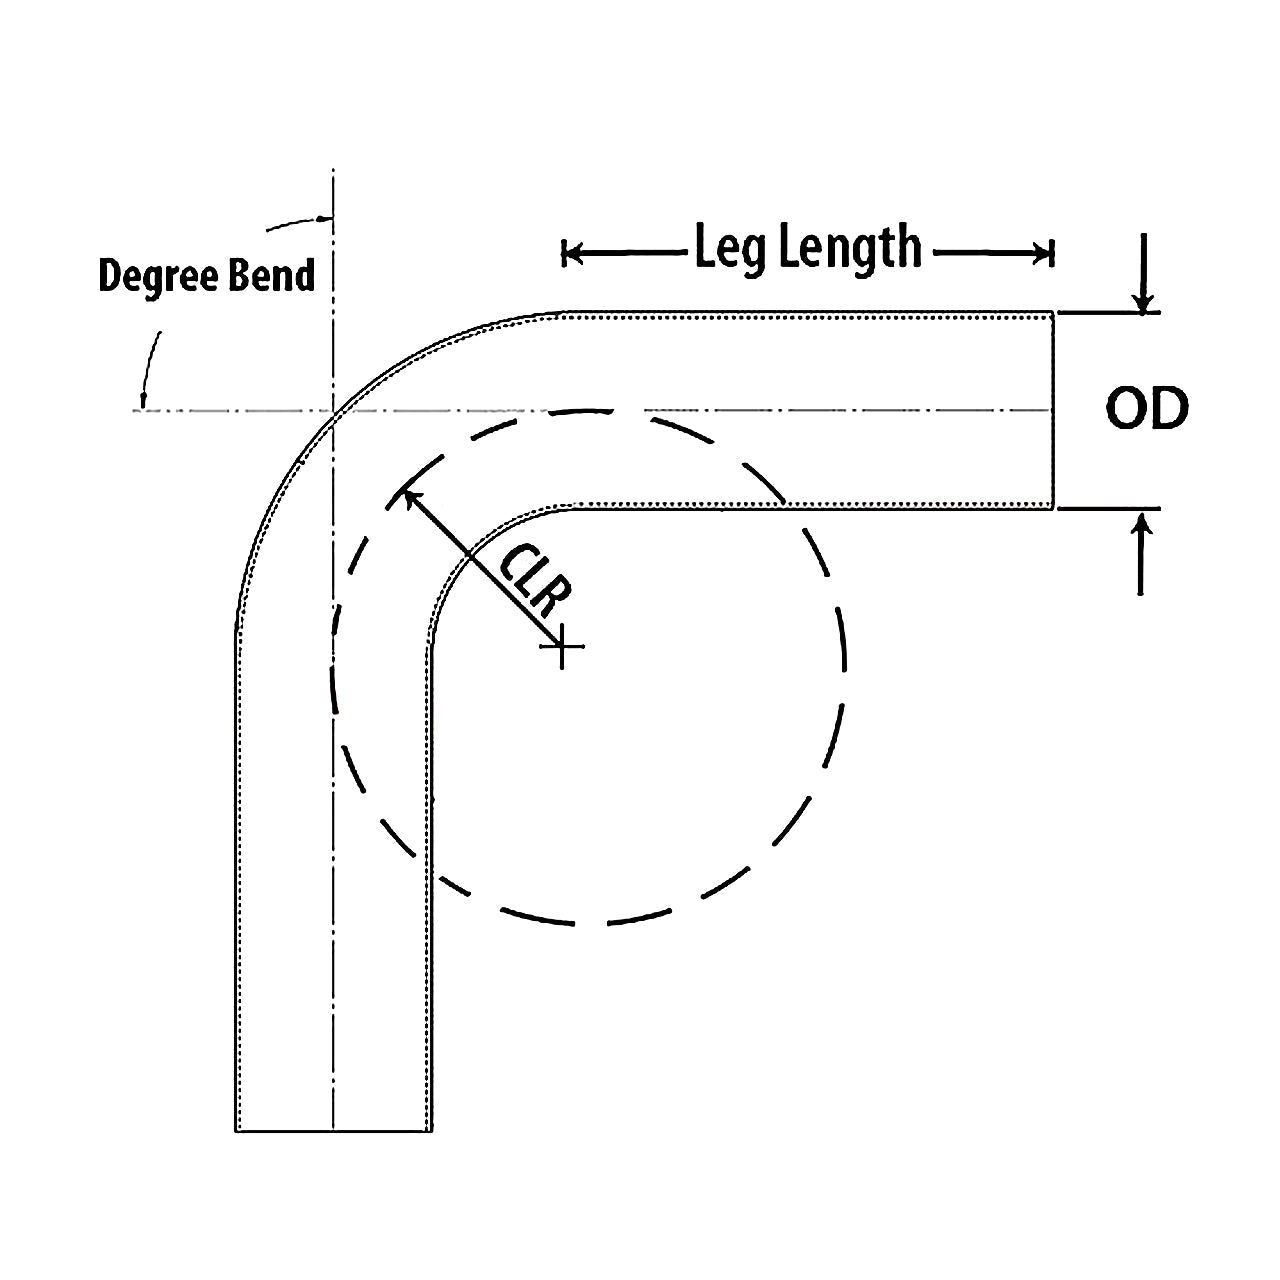 HPS 3/4" 45 Degree Bend 6061 Aluminum Elbow Pipe Tubing with 2" Center Line Radius